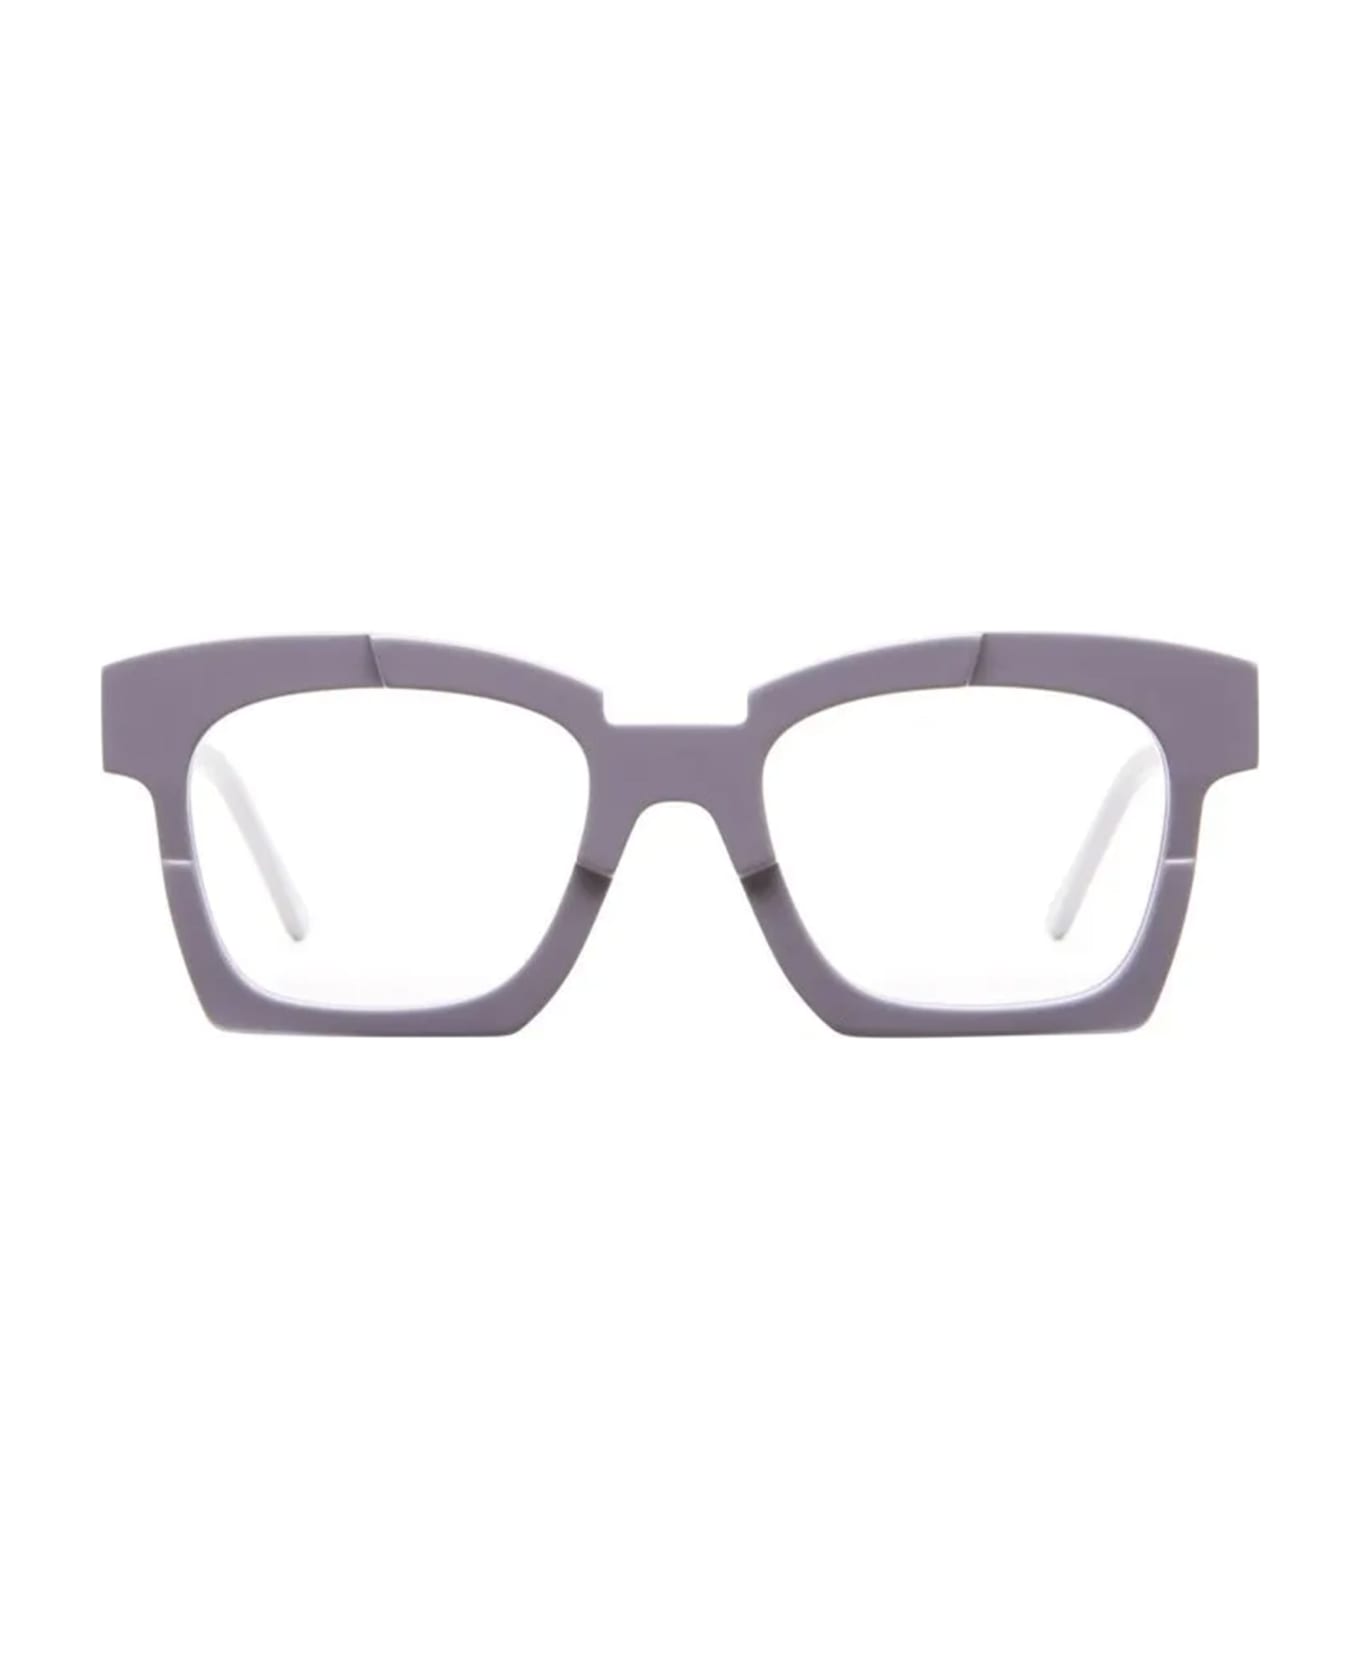 Kuboraum Mask K5 - Misty Lilac Rx Glasses - violet